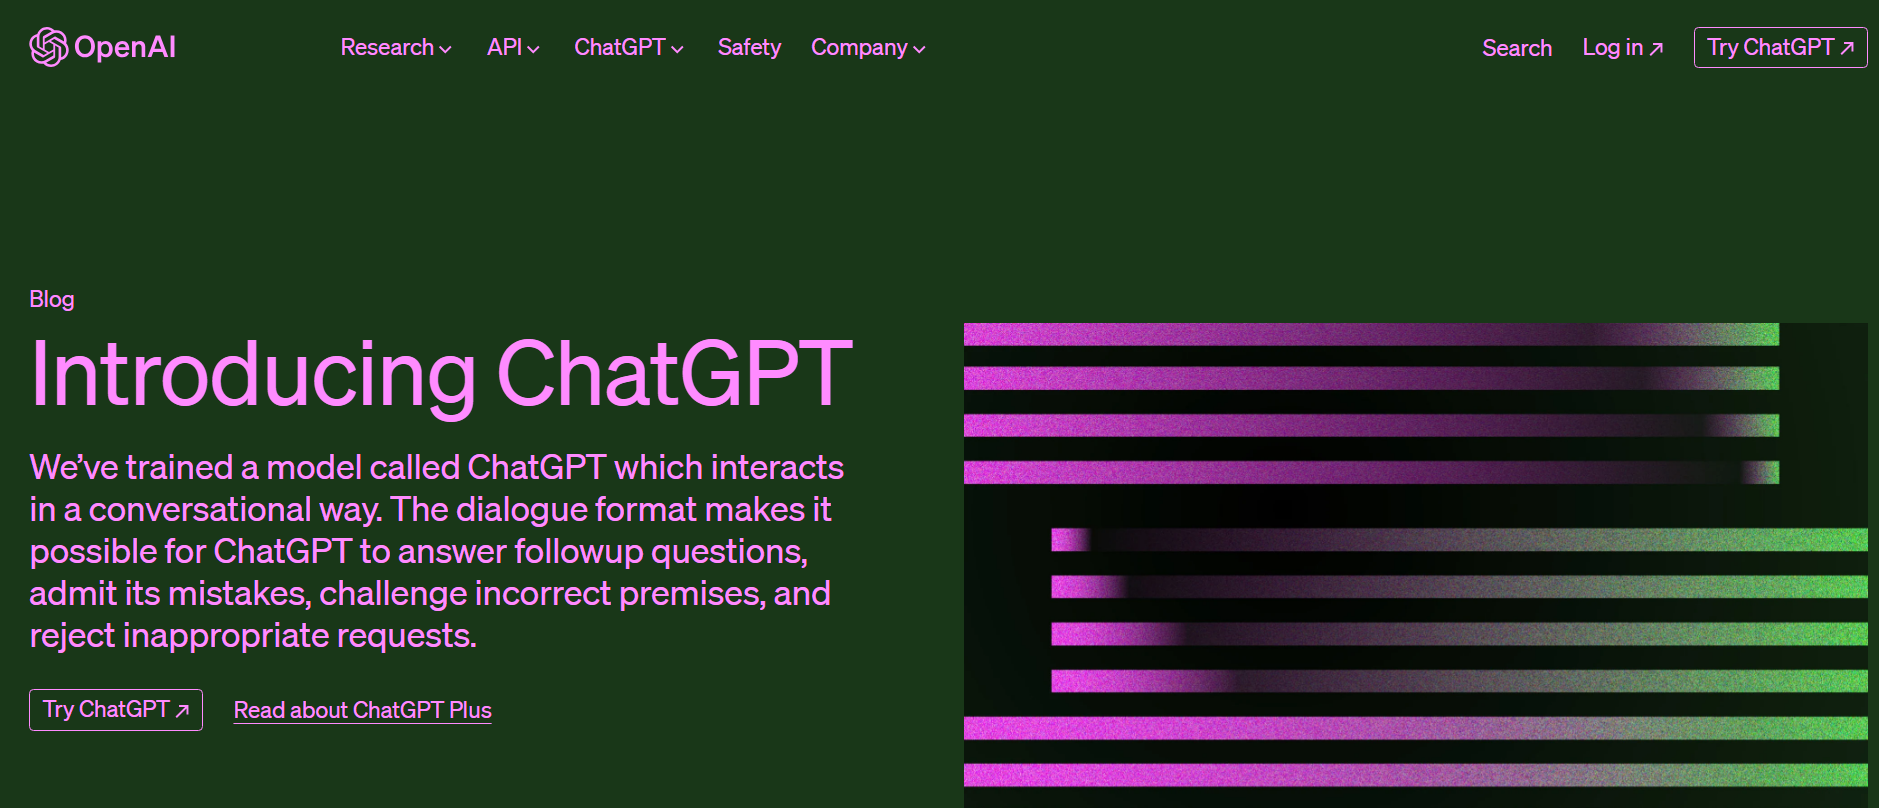 chatGPT对经济社会的影响